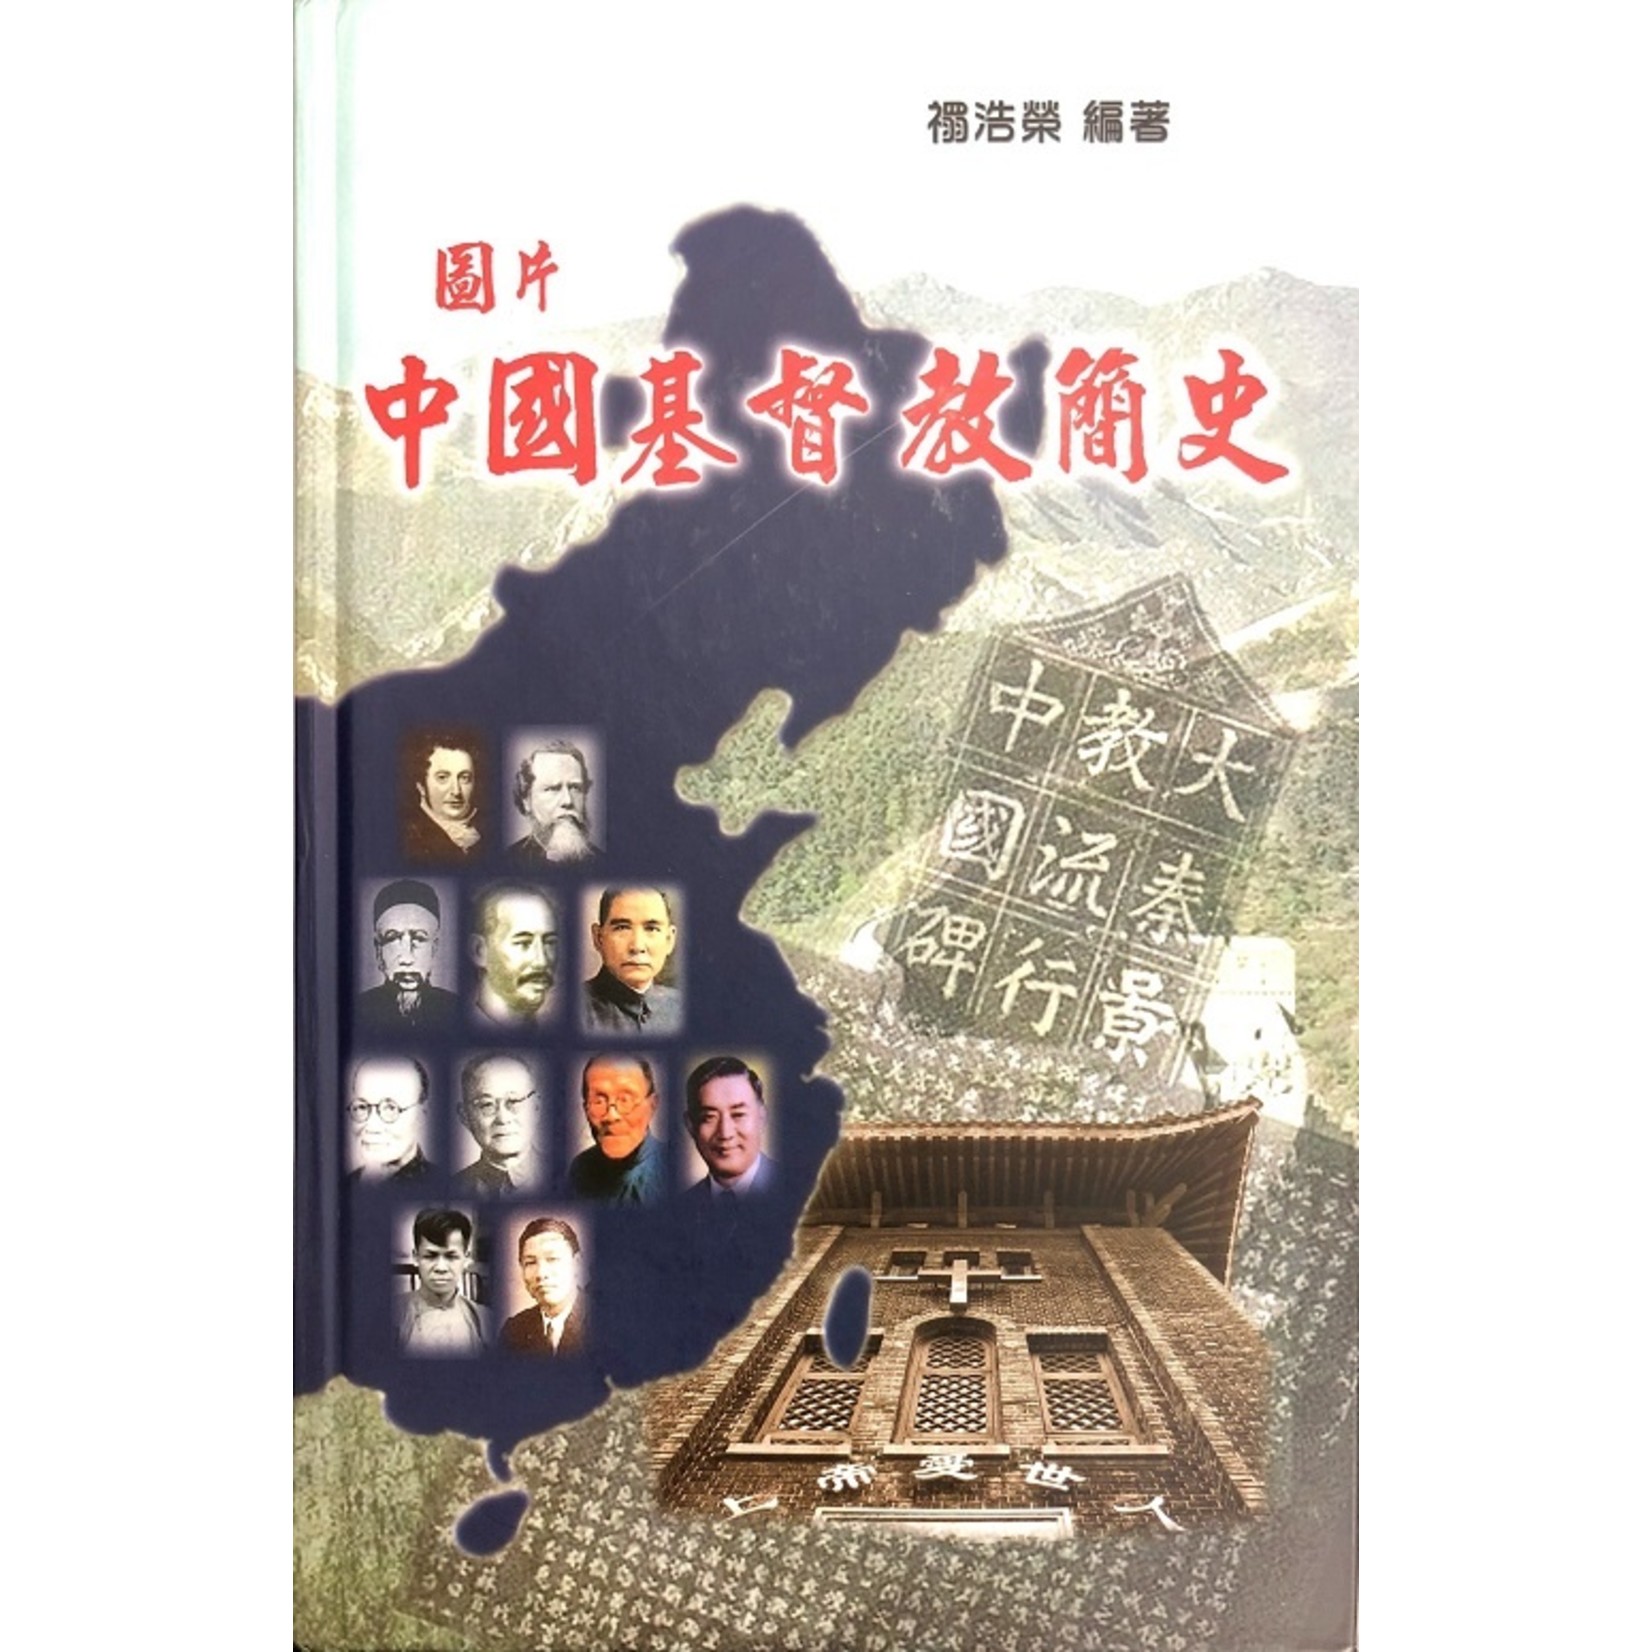 天道書樓 Tien Dao Publishing House 圖片中國基督教簡史